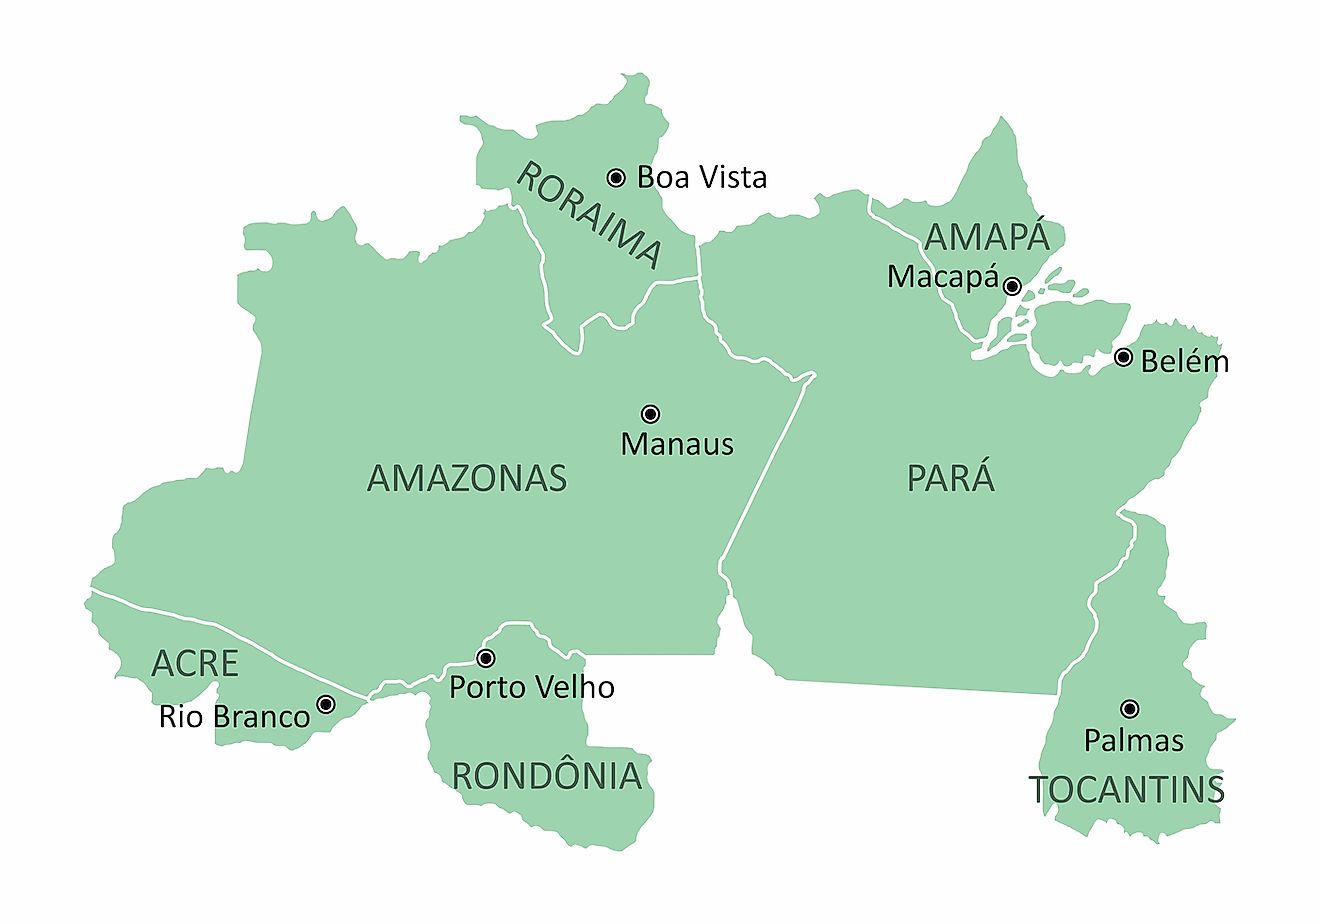 Map of the Brazil north region. Image credit: Luisrftc/Shutterstock.com